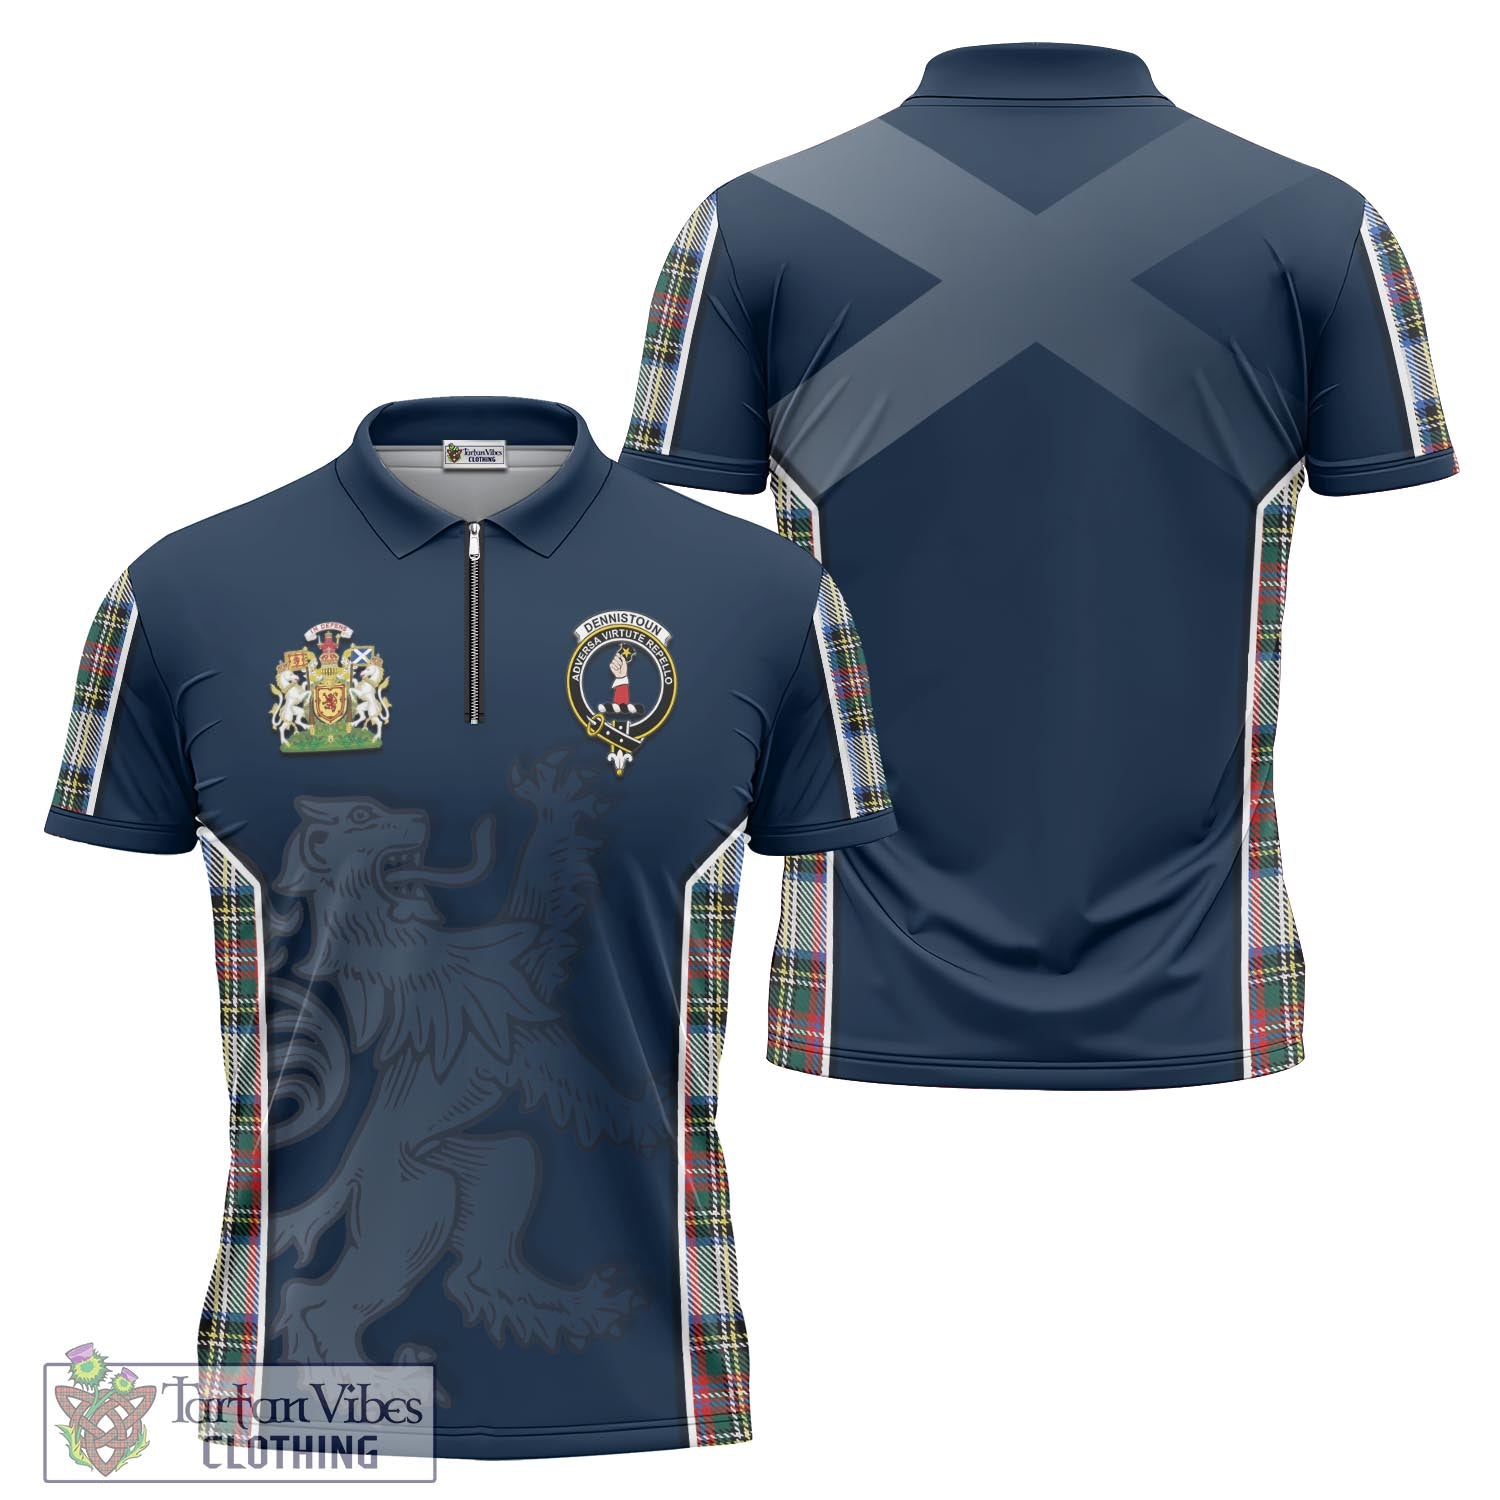 Tartan Vibes Clothing Dennistoun Tartan Zipper Polo Shirt with Family Crest and Lion Rampant Vibes Sport Style